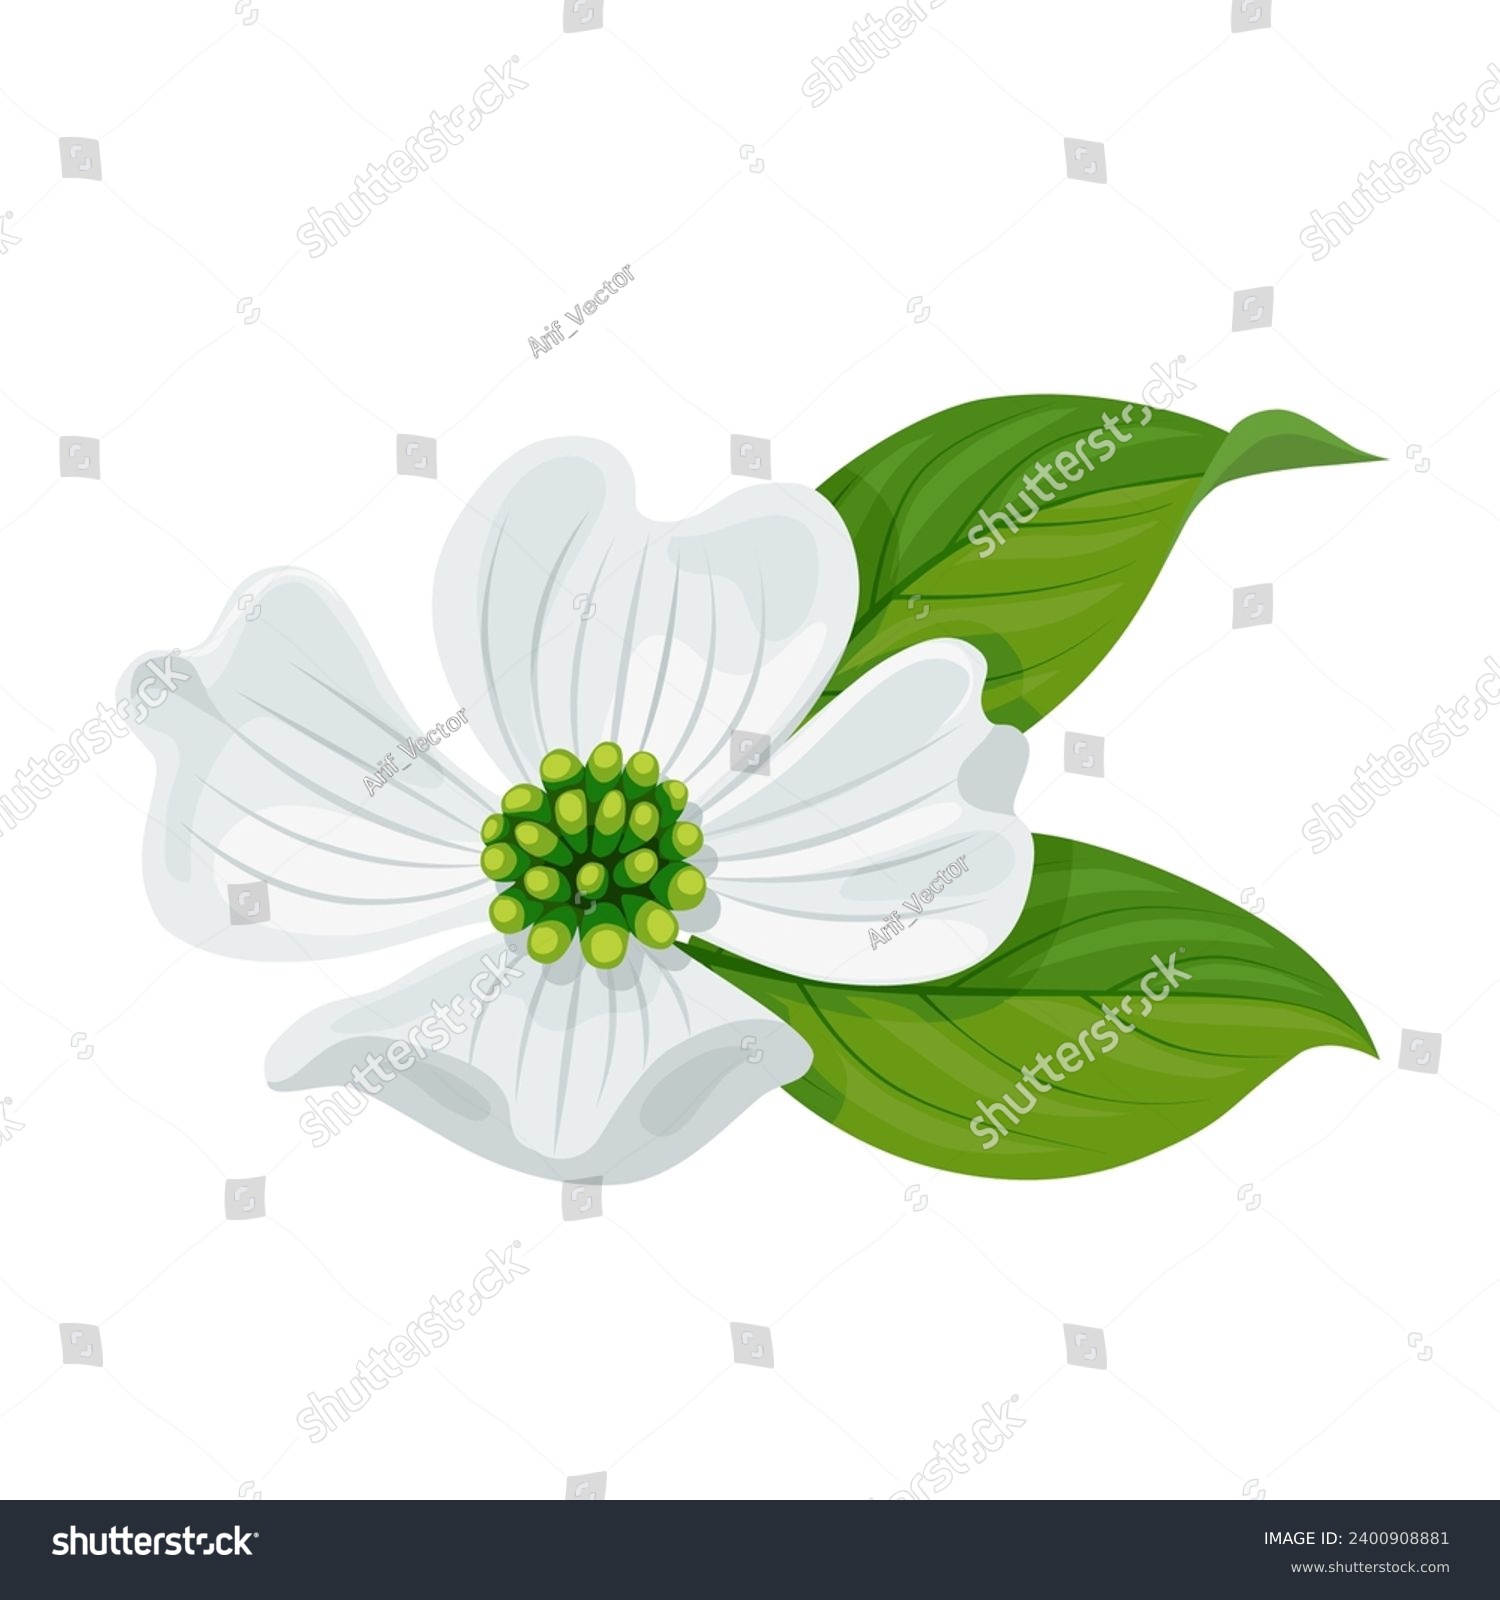 SVG of Vector illustration, Cornus florida or flowering dogwood, isolated on white background. svg